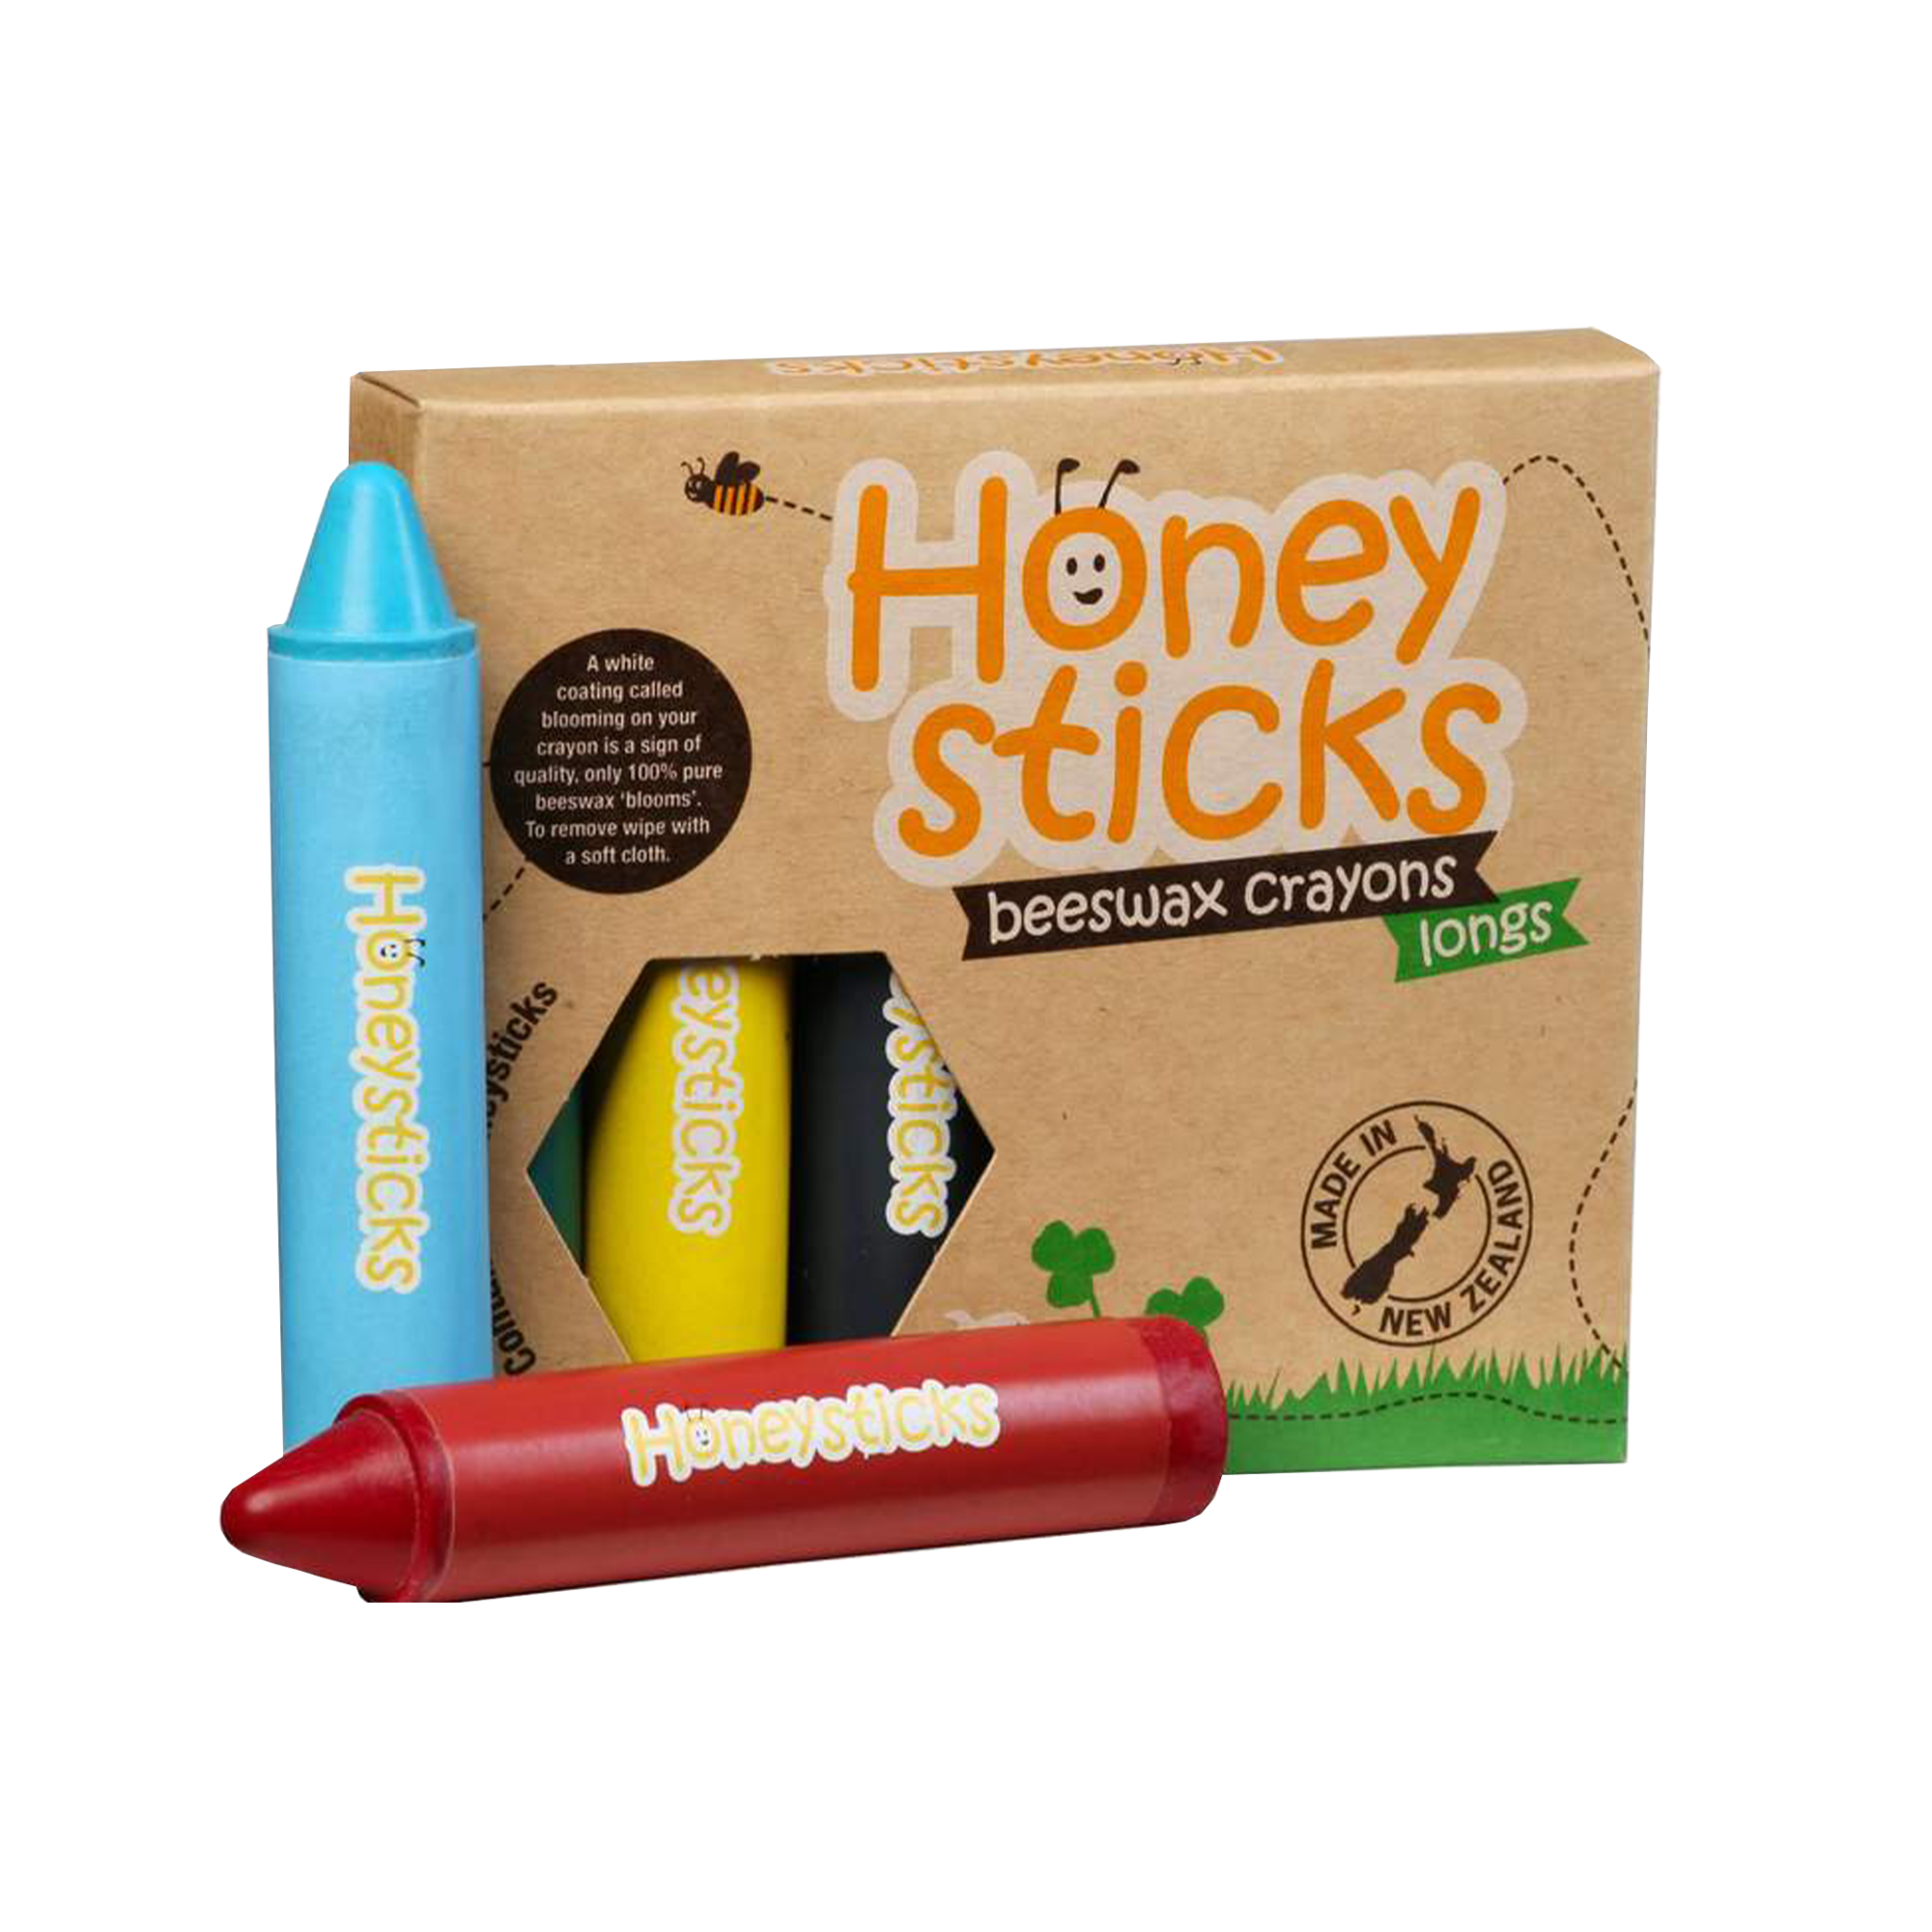 Honeysticks Beeswax Crayons